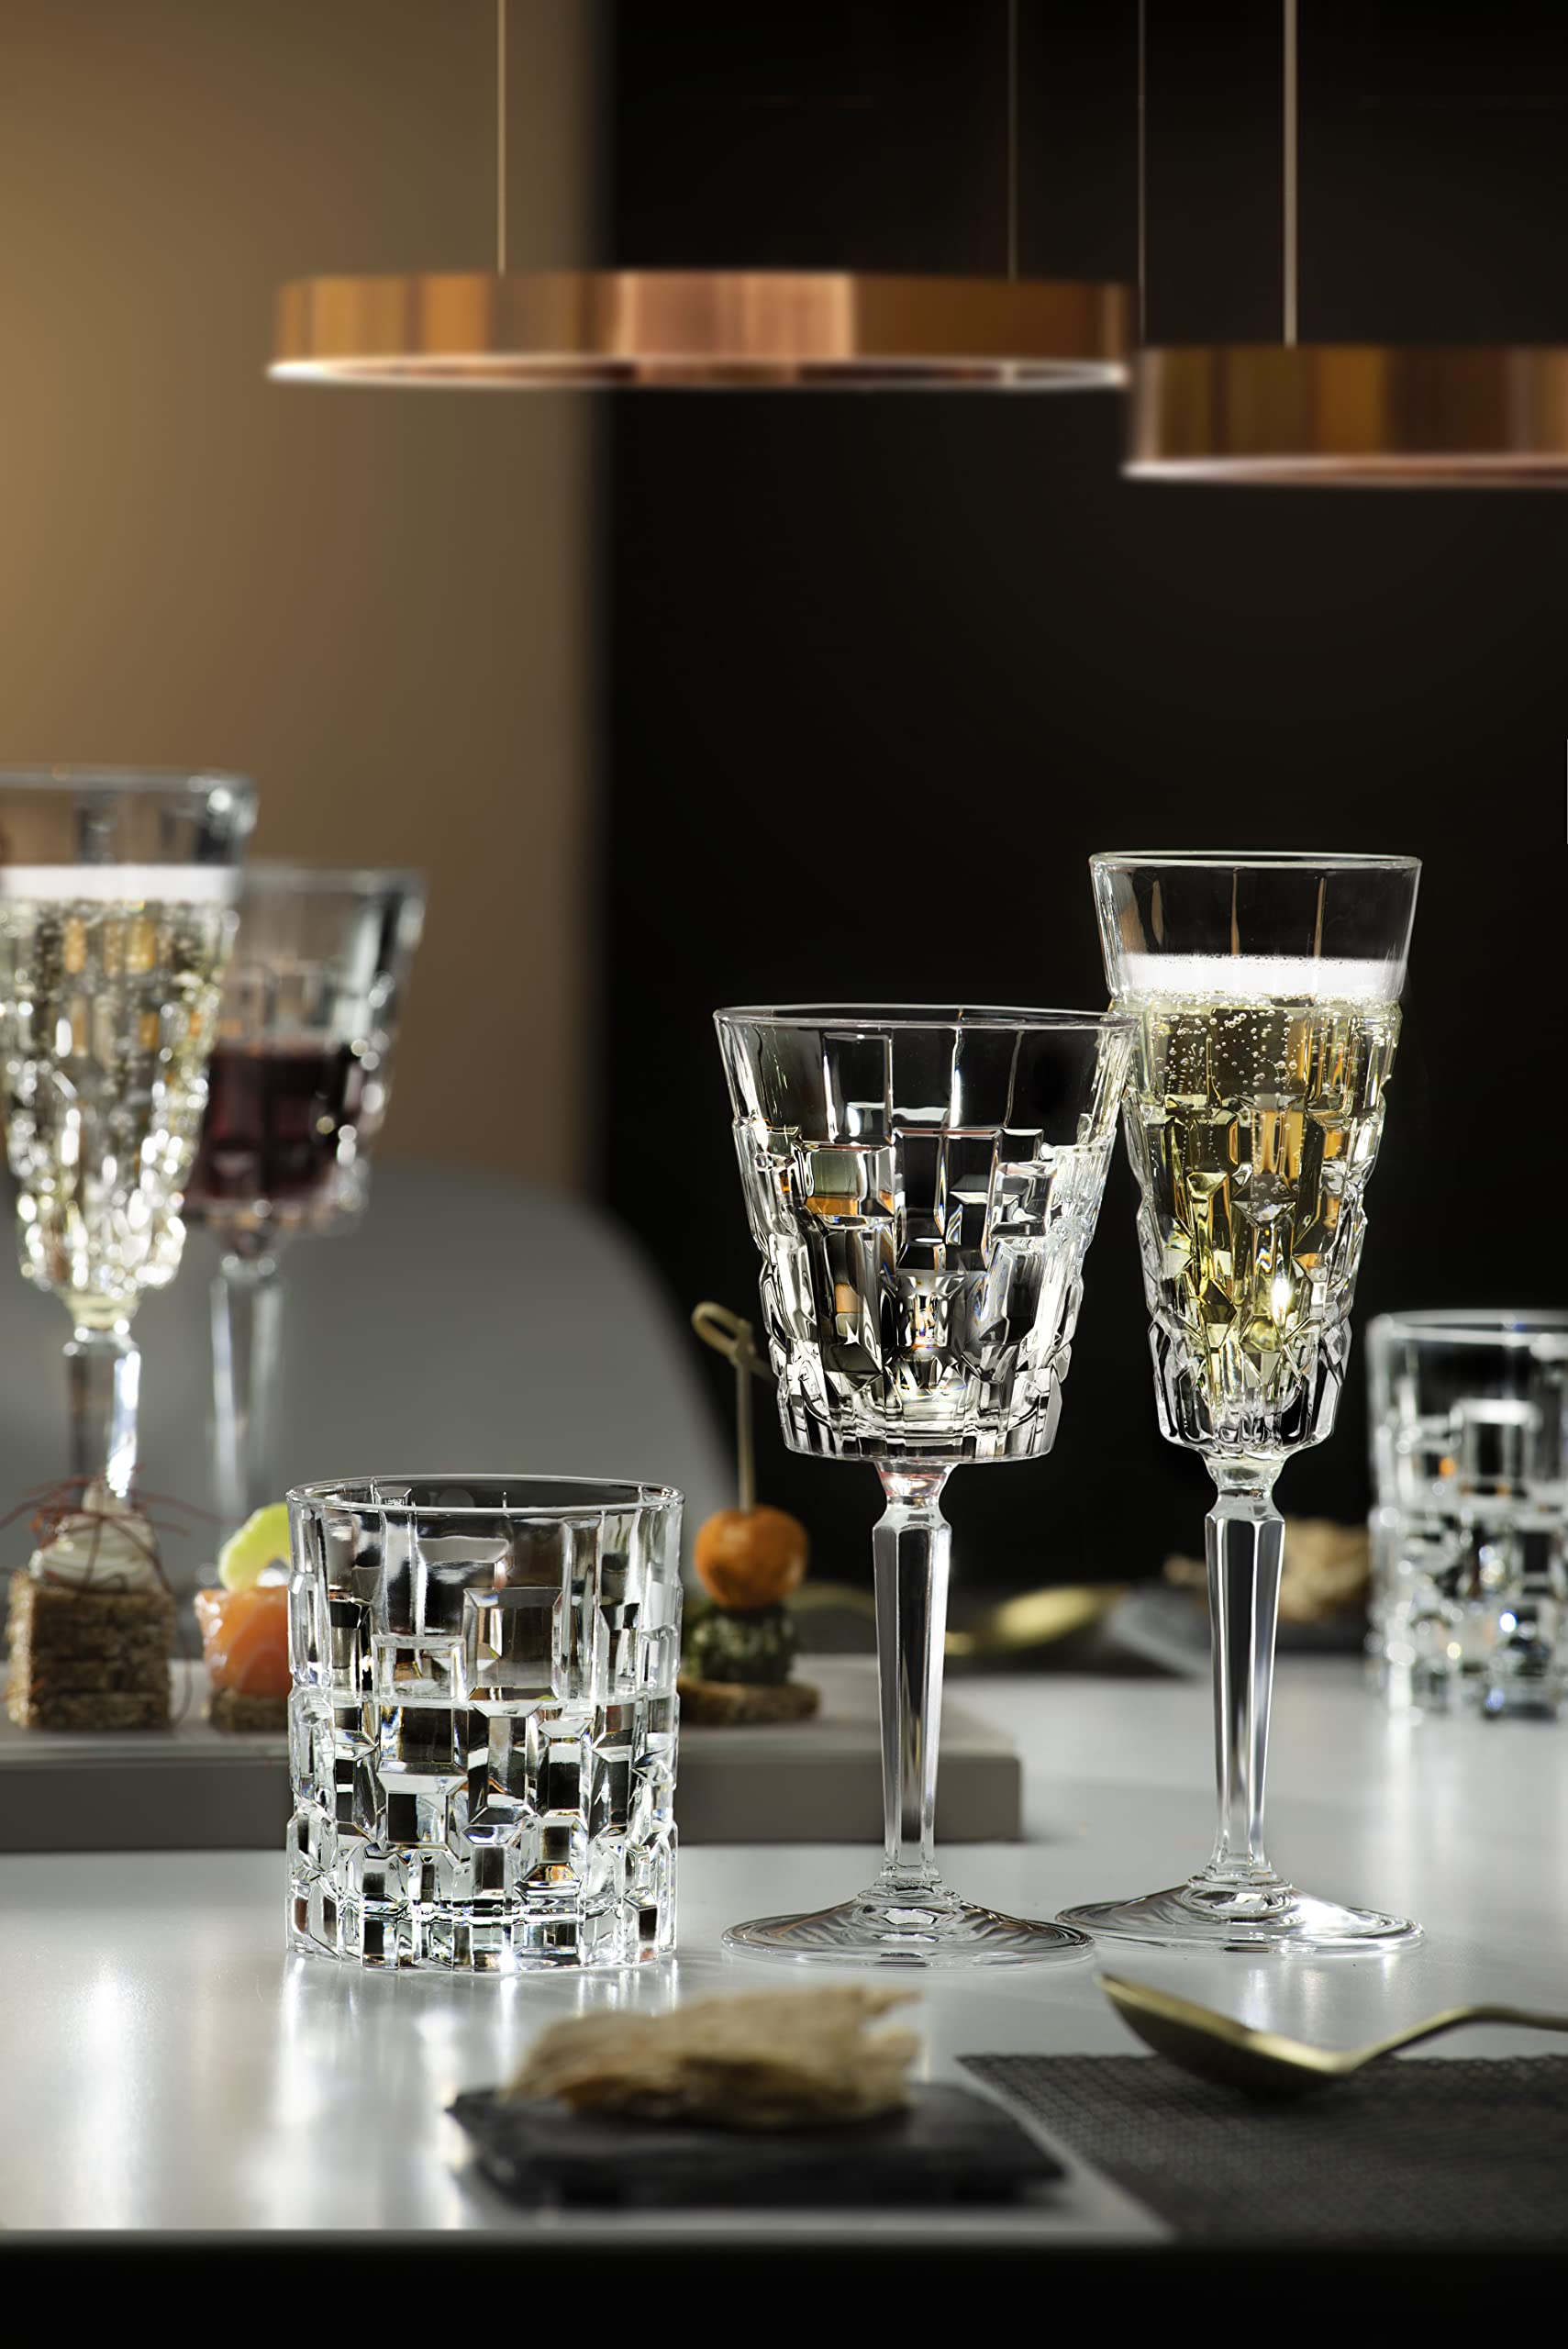 Barski Wine Glass - Goblet - Red Wine - White Wine - Water Glass - Stemmed Glasses - Set of 6 Goblets - Crystal like Glass - 9.3 oz. Beautifully Designed Made in Europe